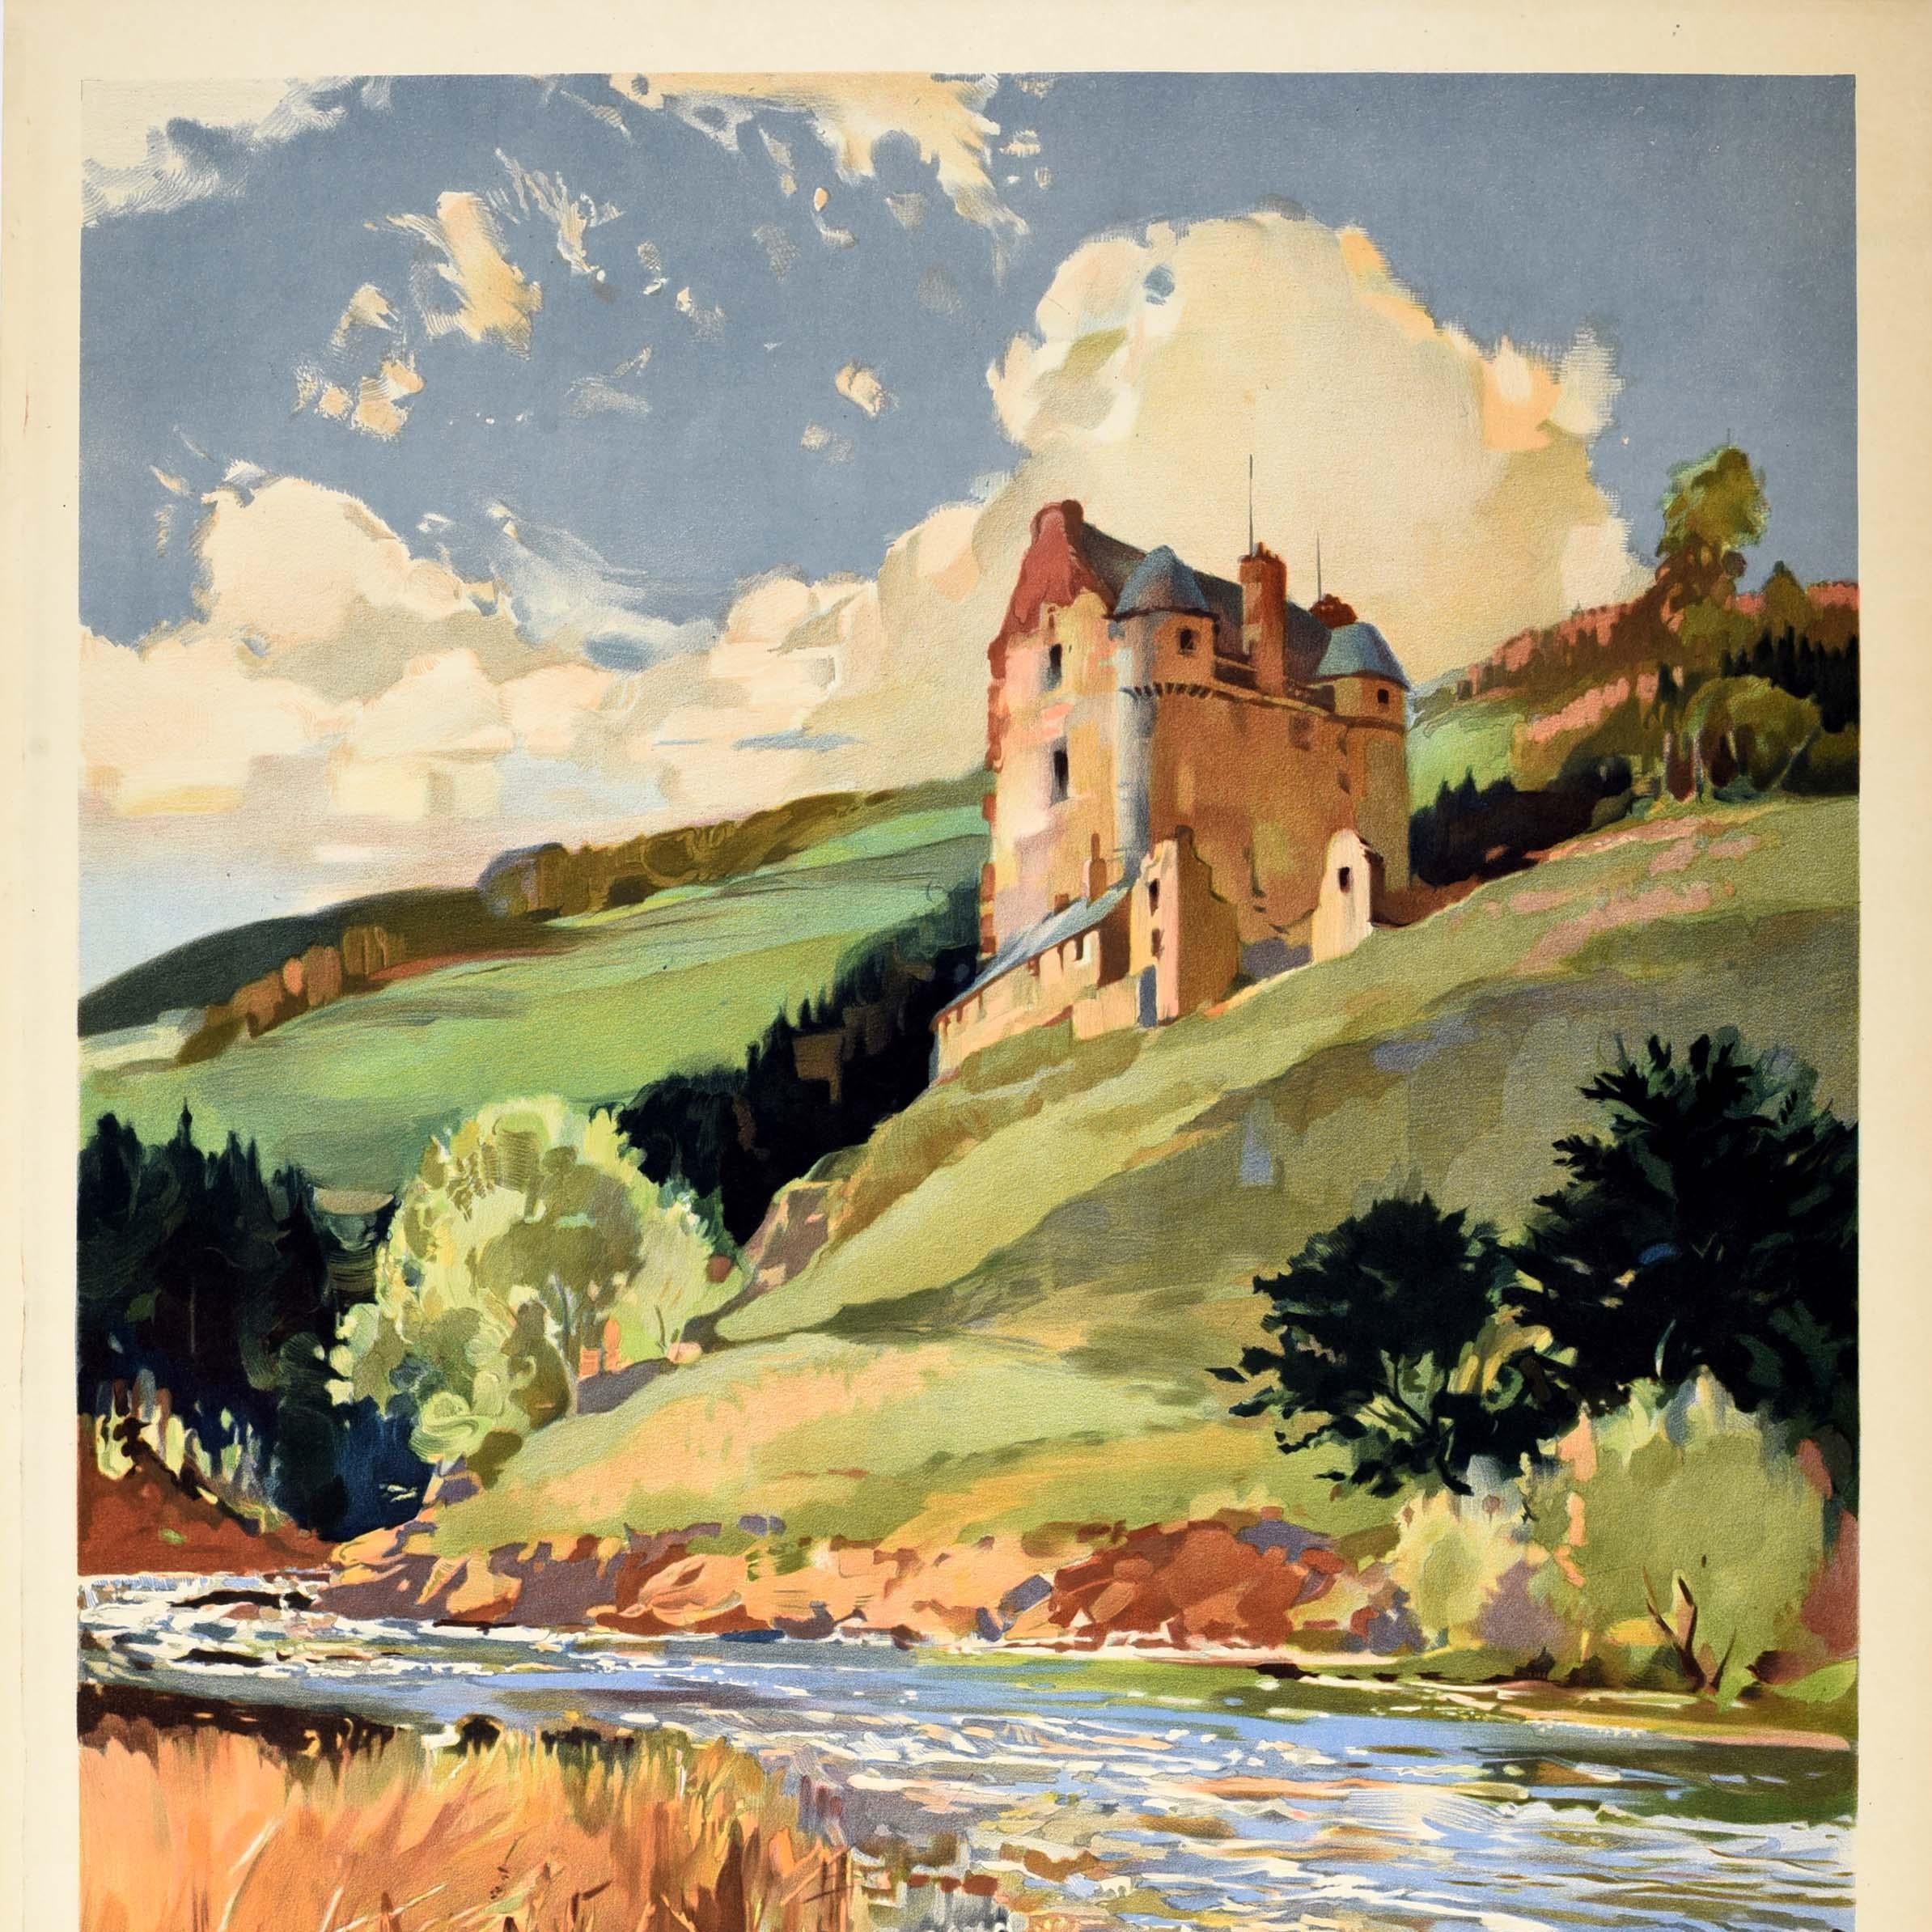 Original Vintage Travel Poster The River Tweed Scotland British Railways Design In Good Condition In London, GB